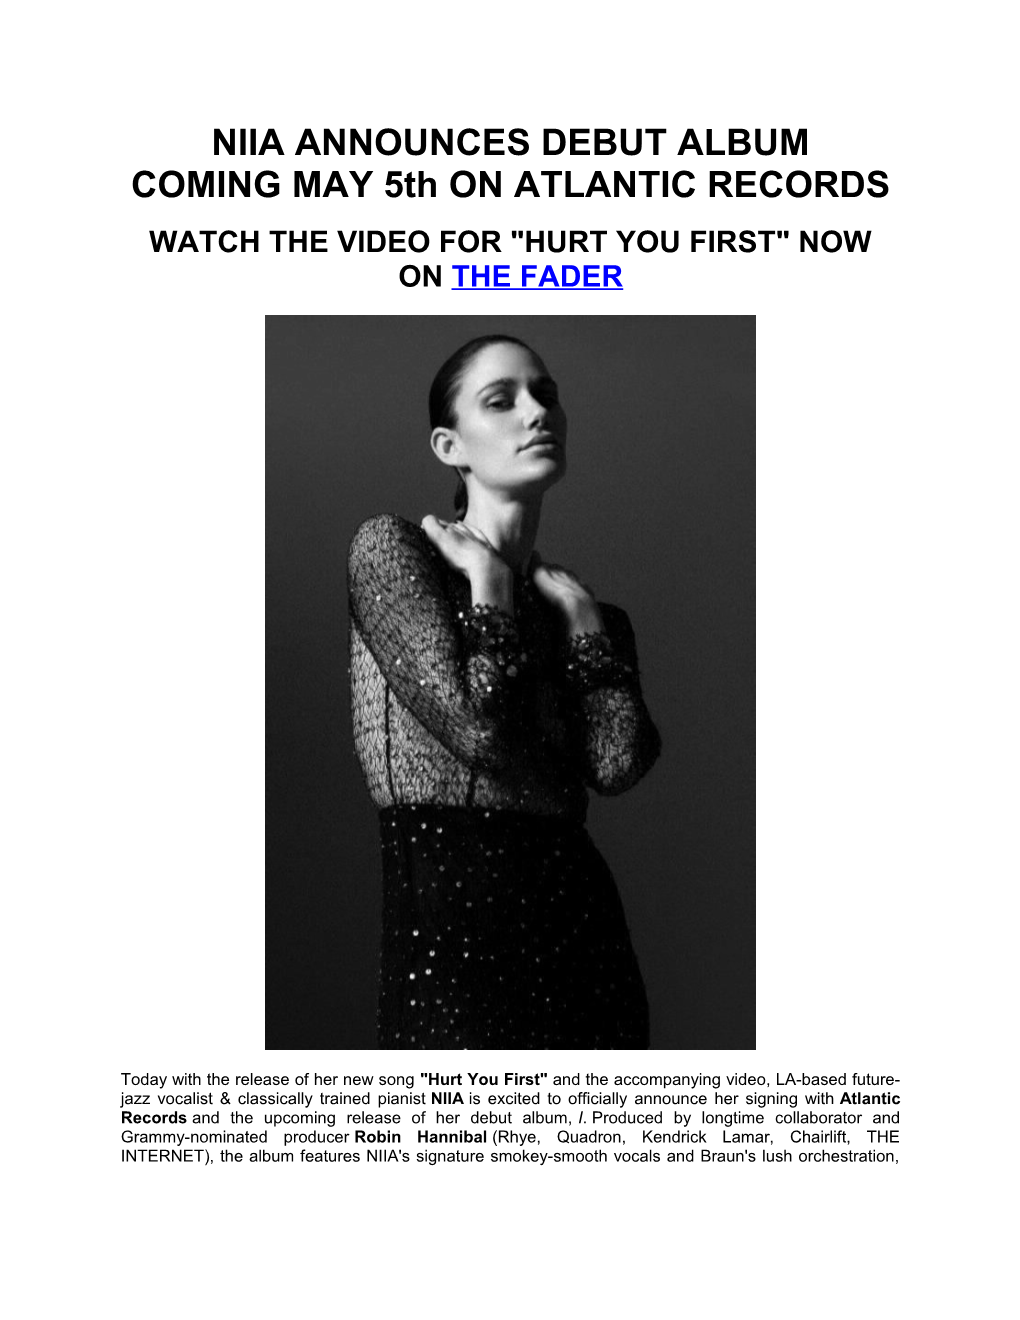 NIIA ANNOUNCES DEBUT ALBUM COMINGMAY 5Thon ATLANTIC RECORDS